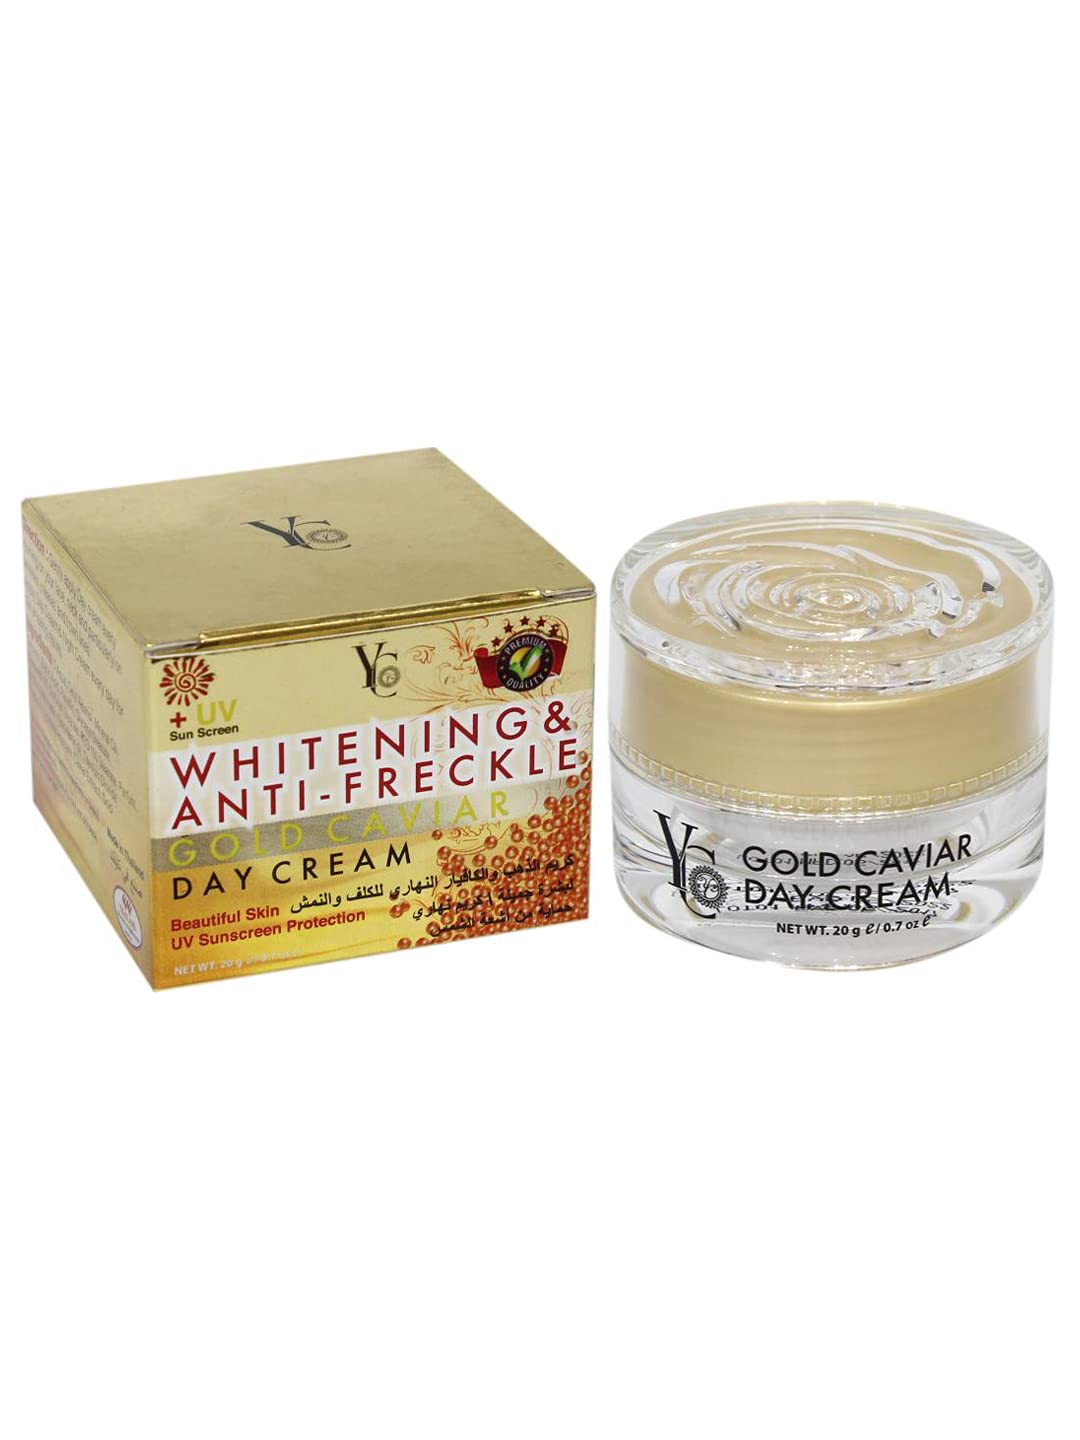 YC Whitening & Anti-Freckle Gold Caviar Day Cream